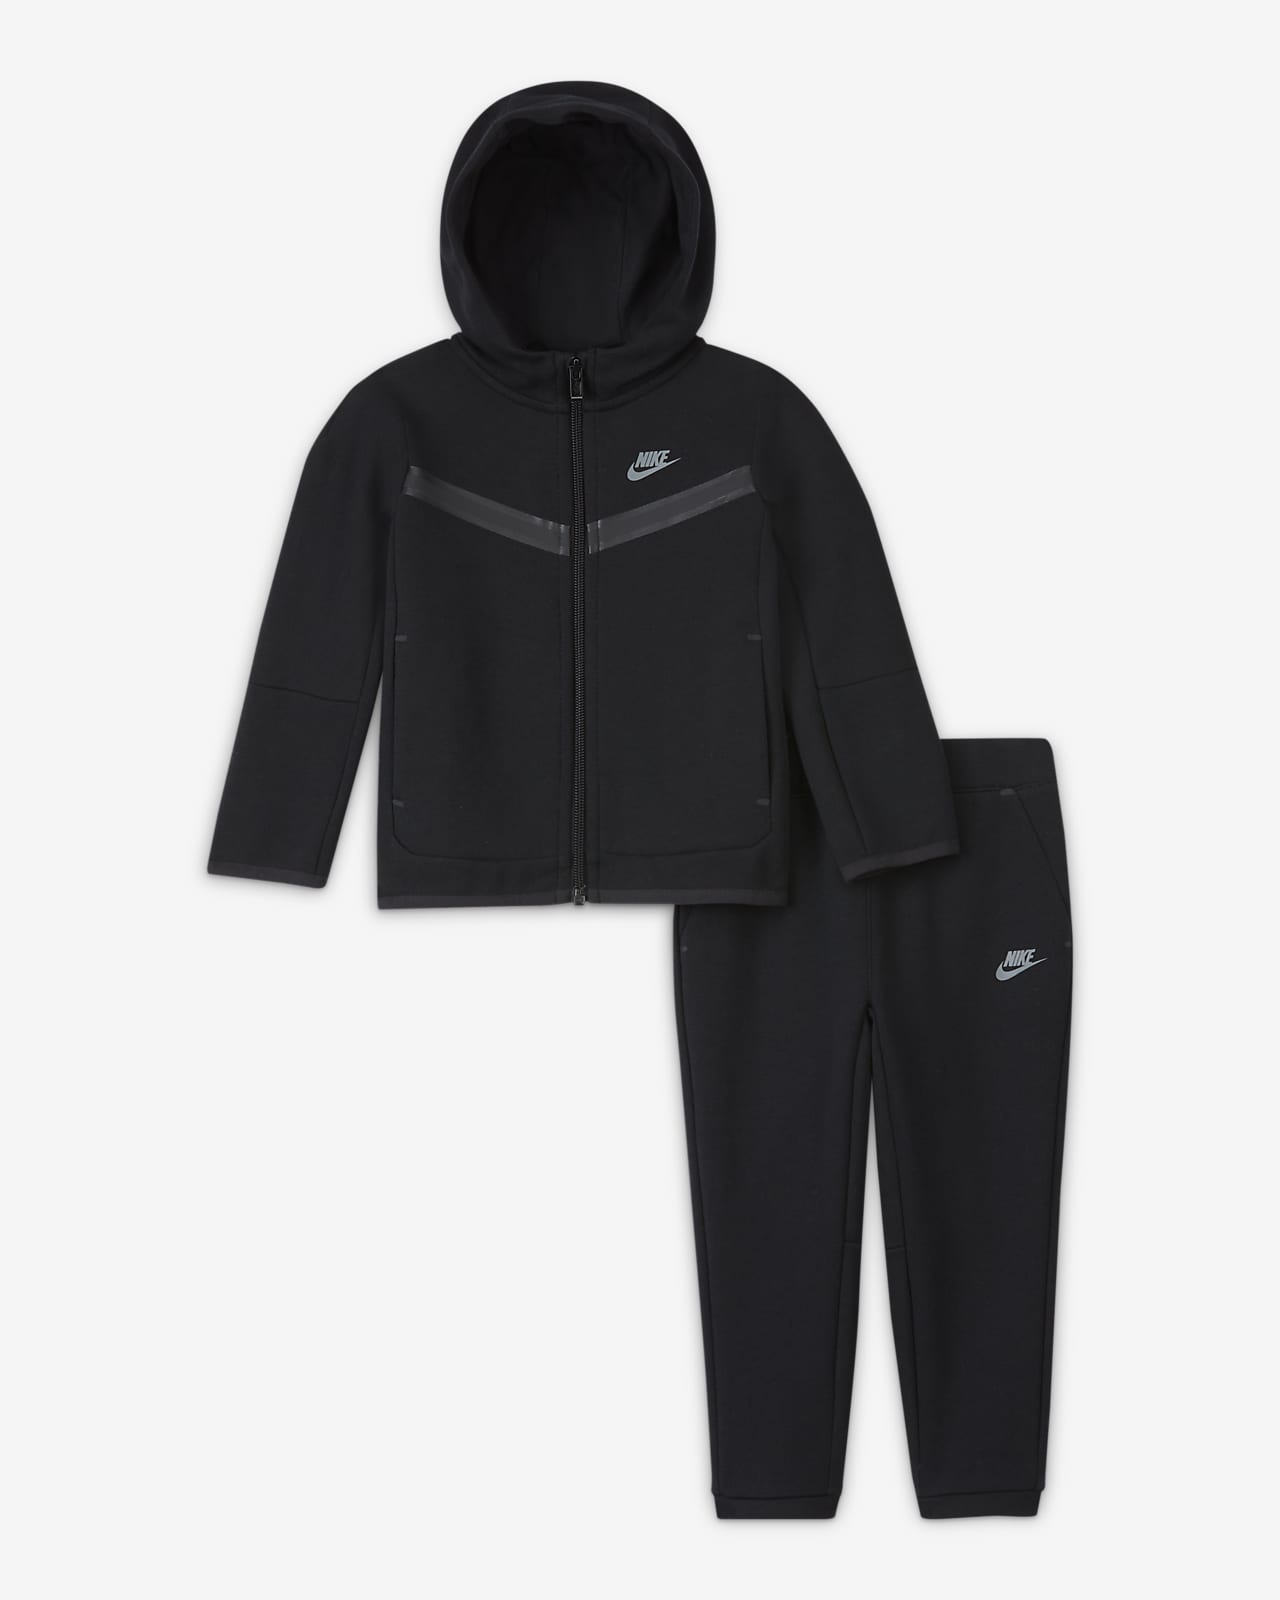 Nike Sportswear Tech Fleece Baby (12-24M) Zip Hoodie and Pants Set